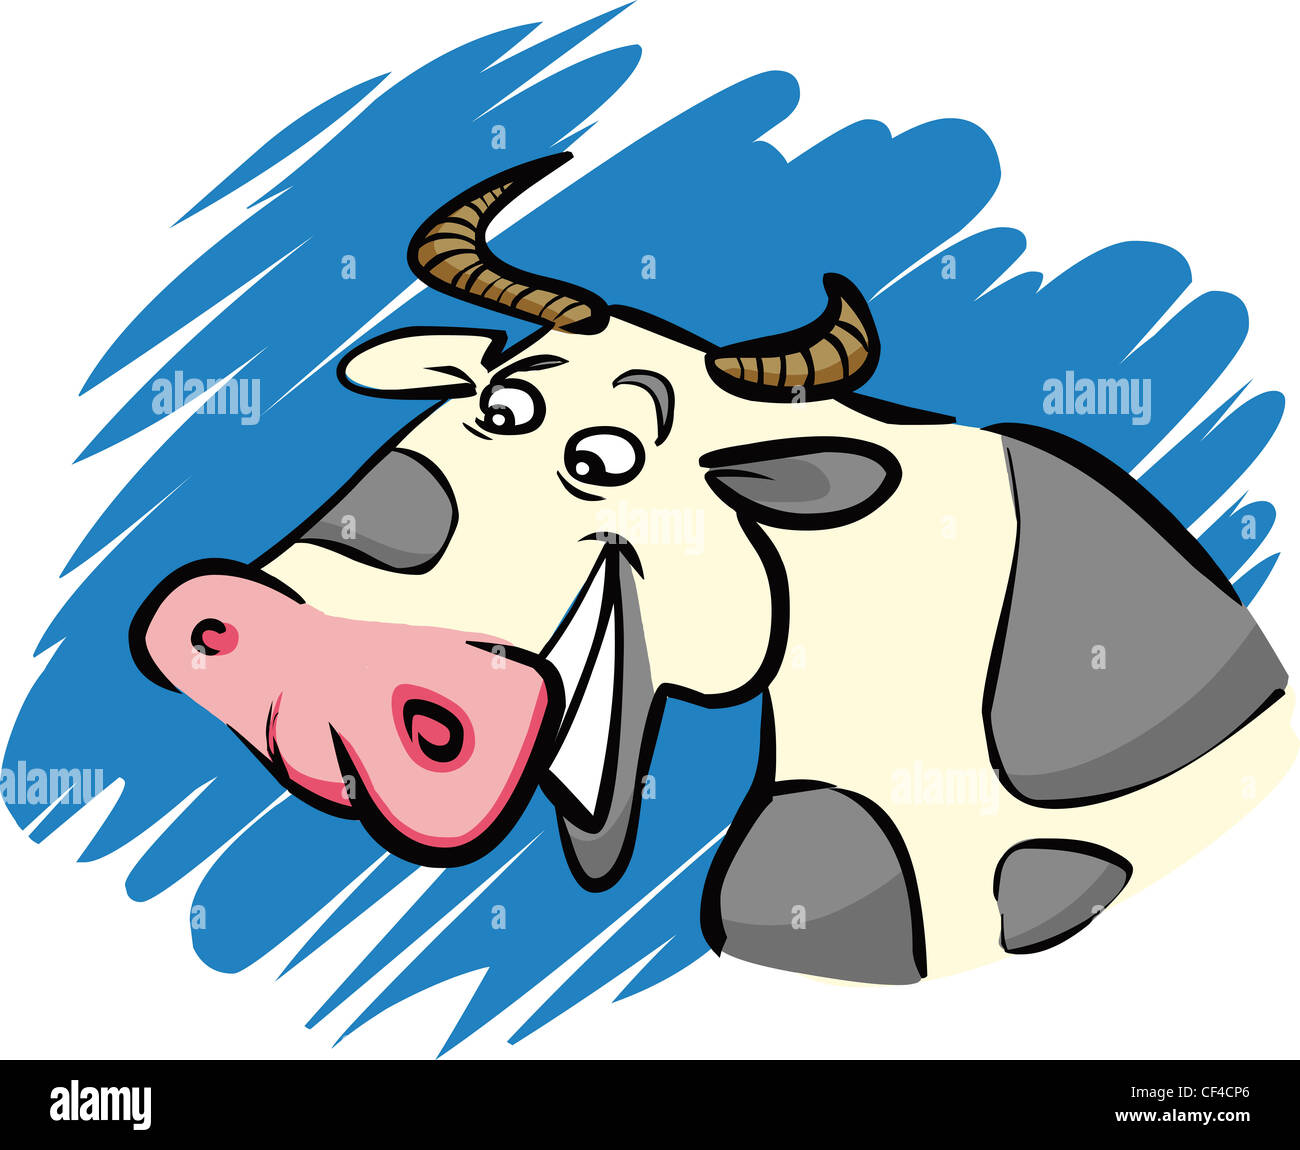 cartoon humorous illustration of funny farm cow Stock Photo